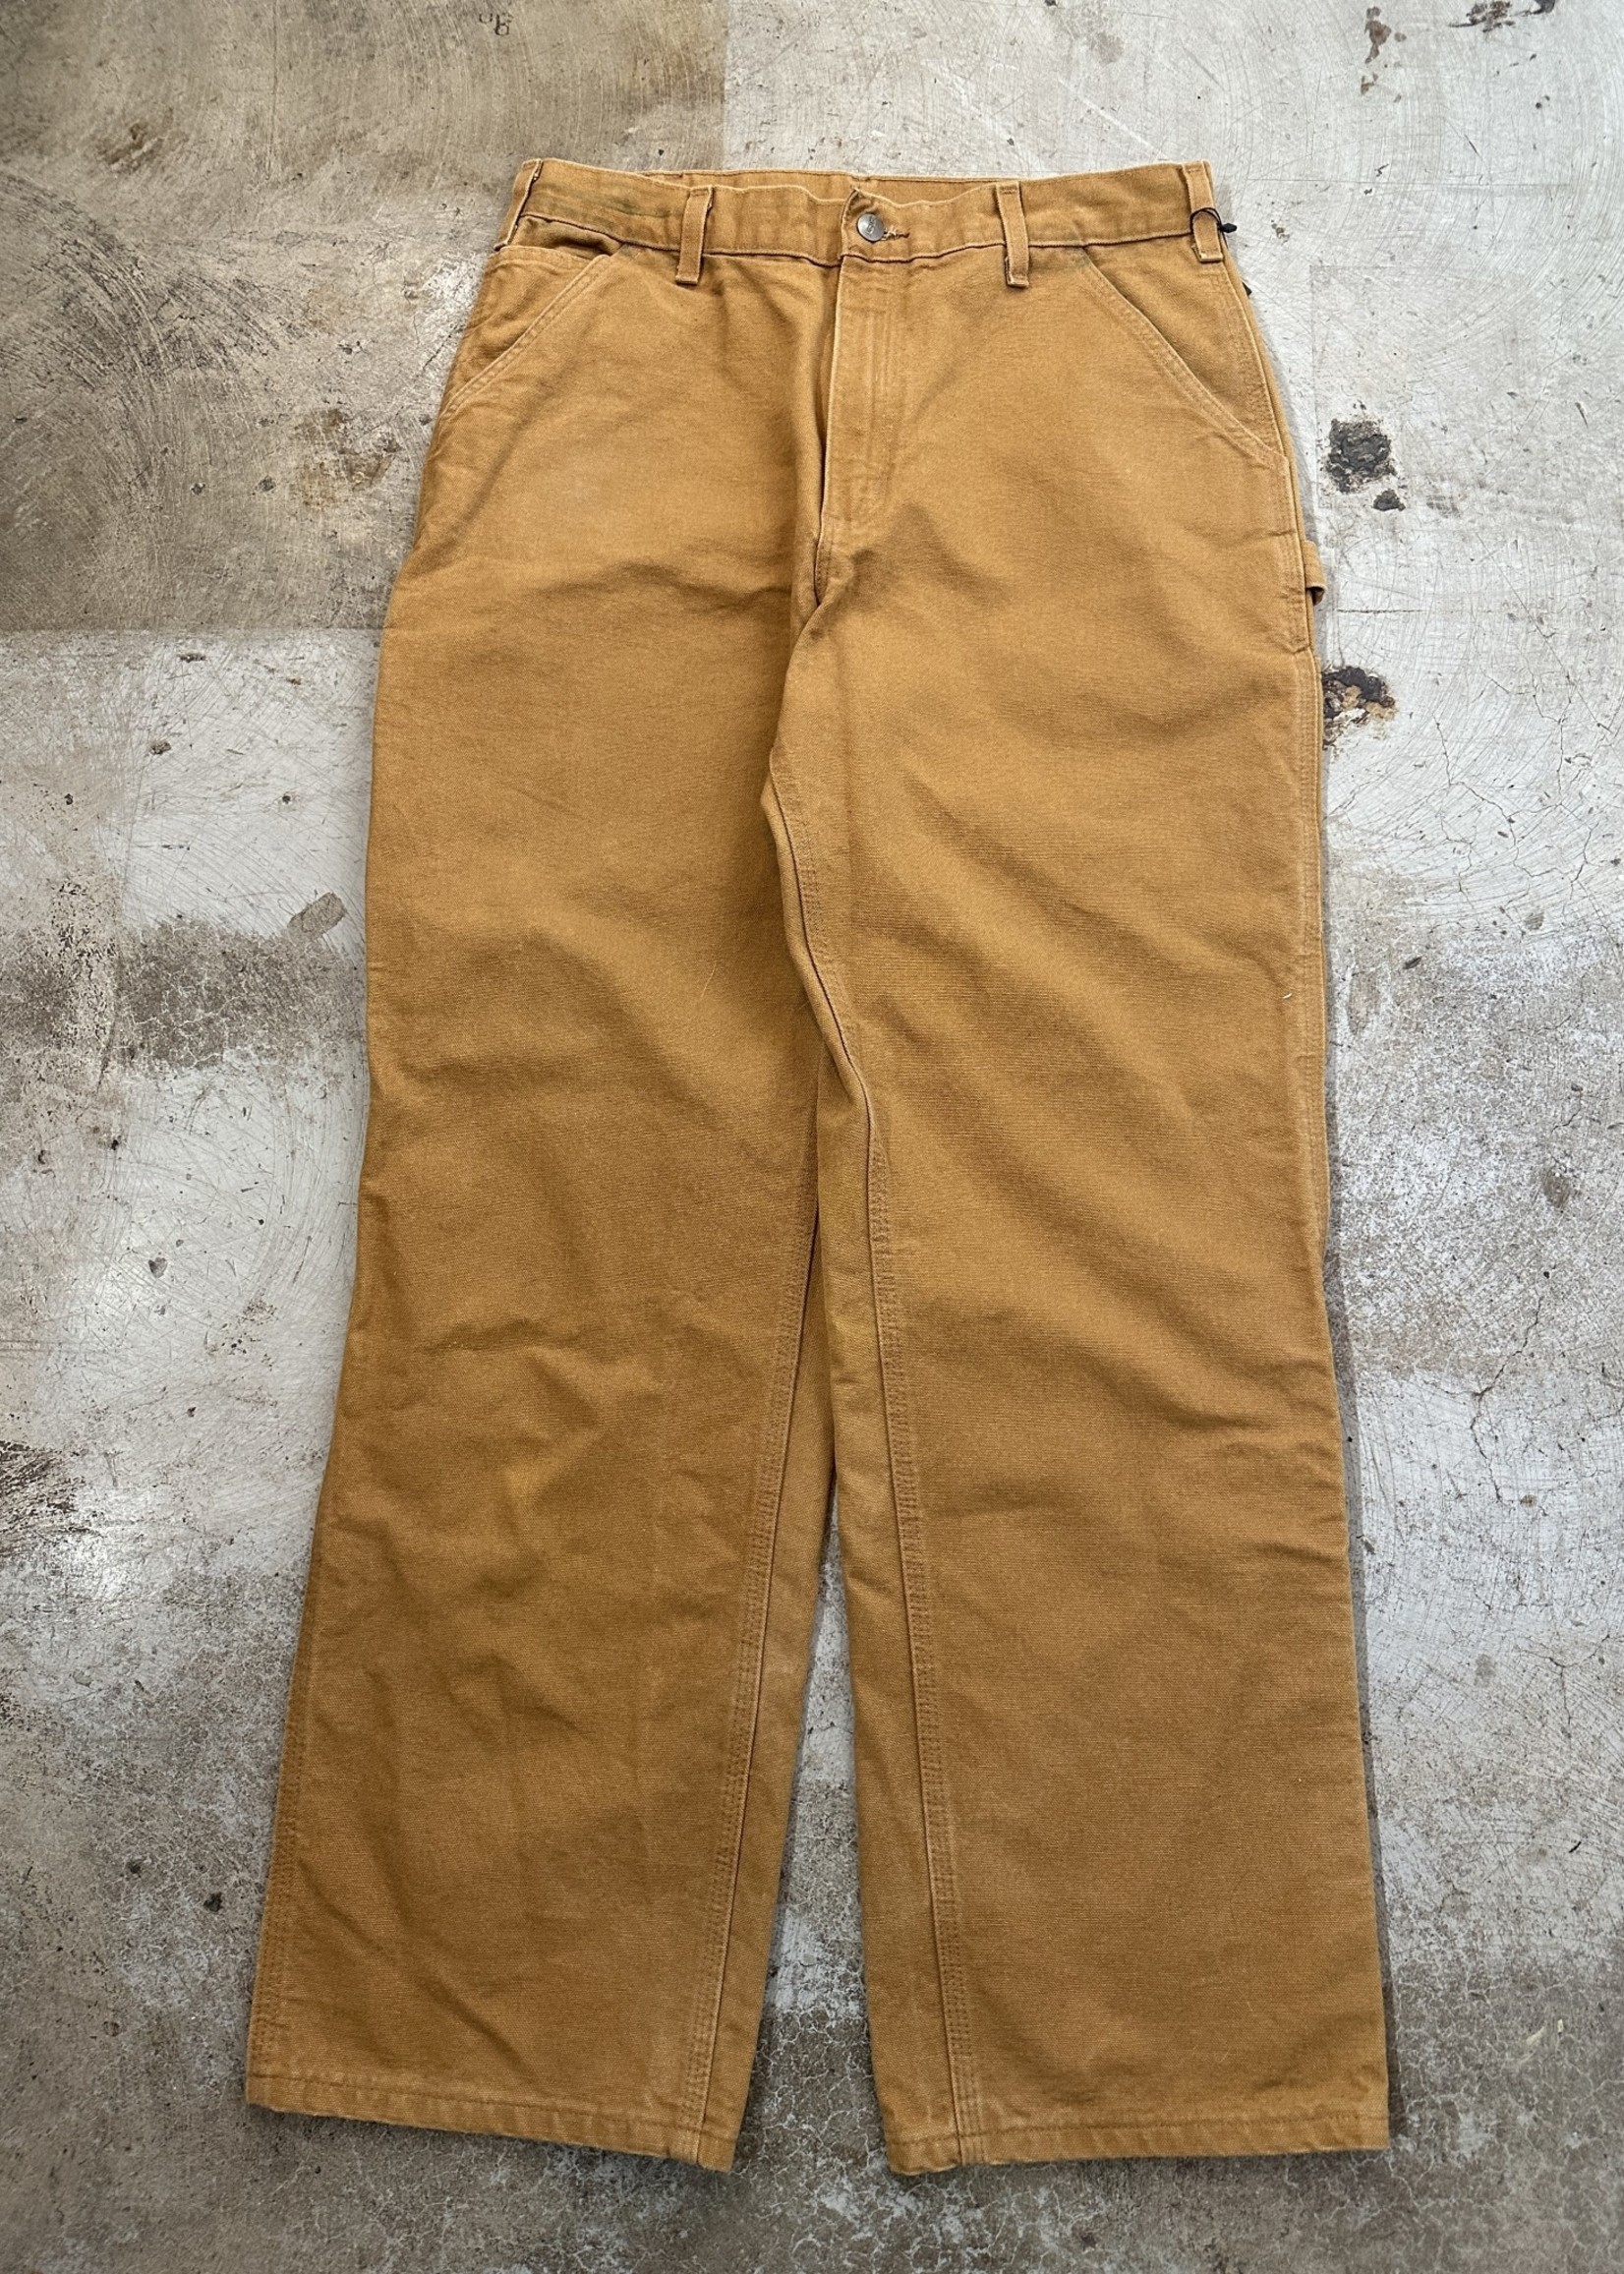 Carhartt Tan Carpenter Pants 34 x 32 - ALT REBEL